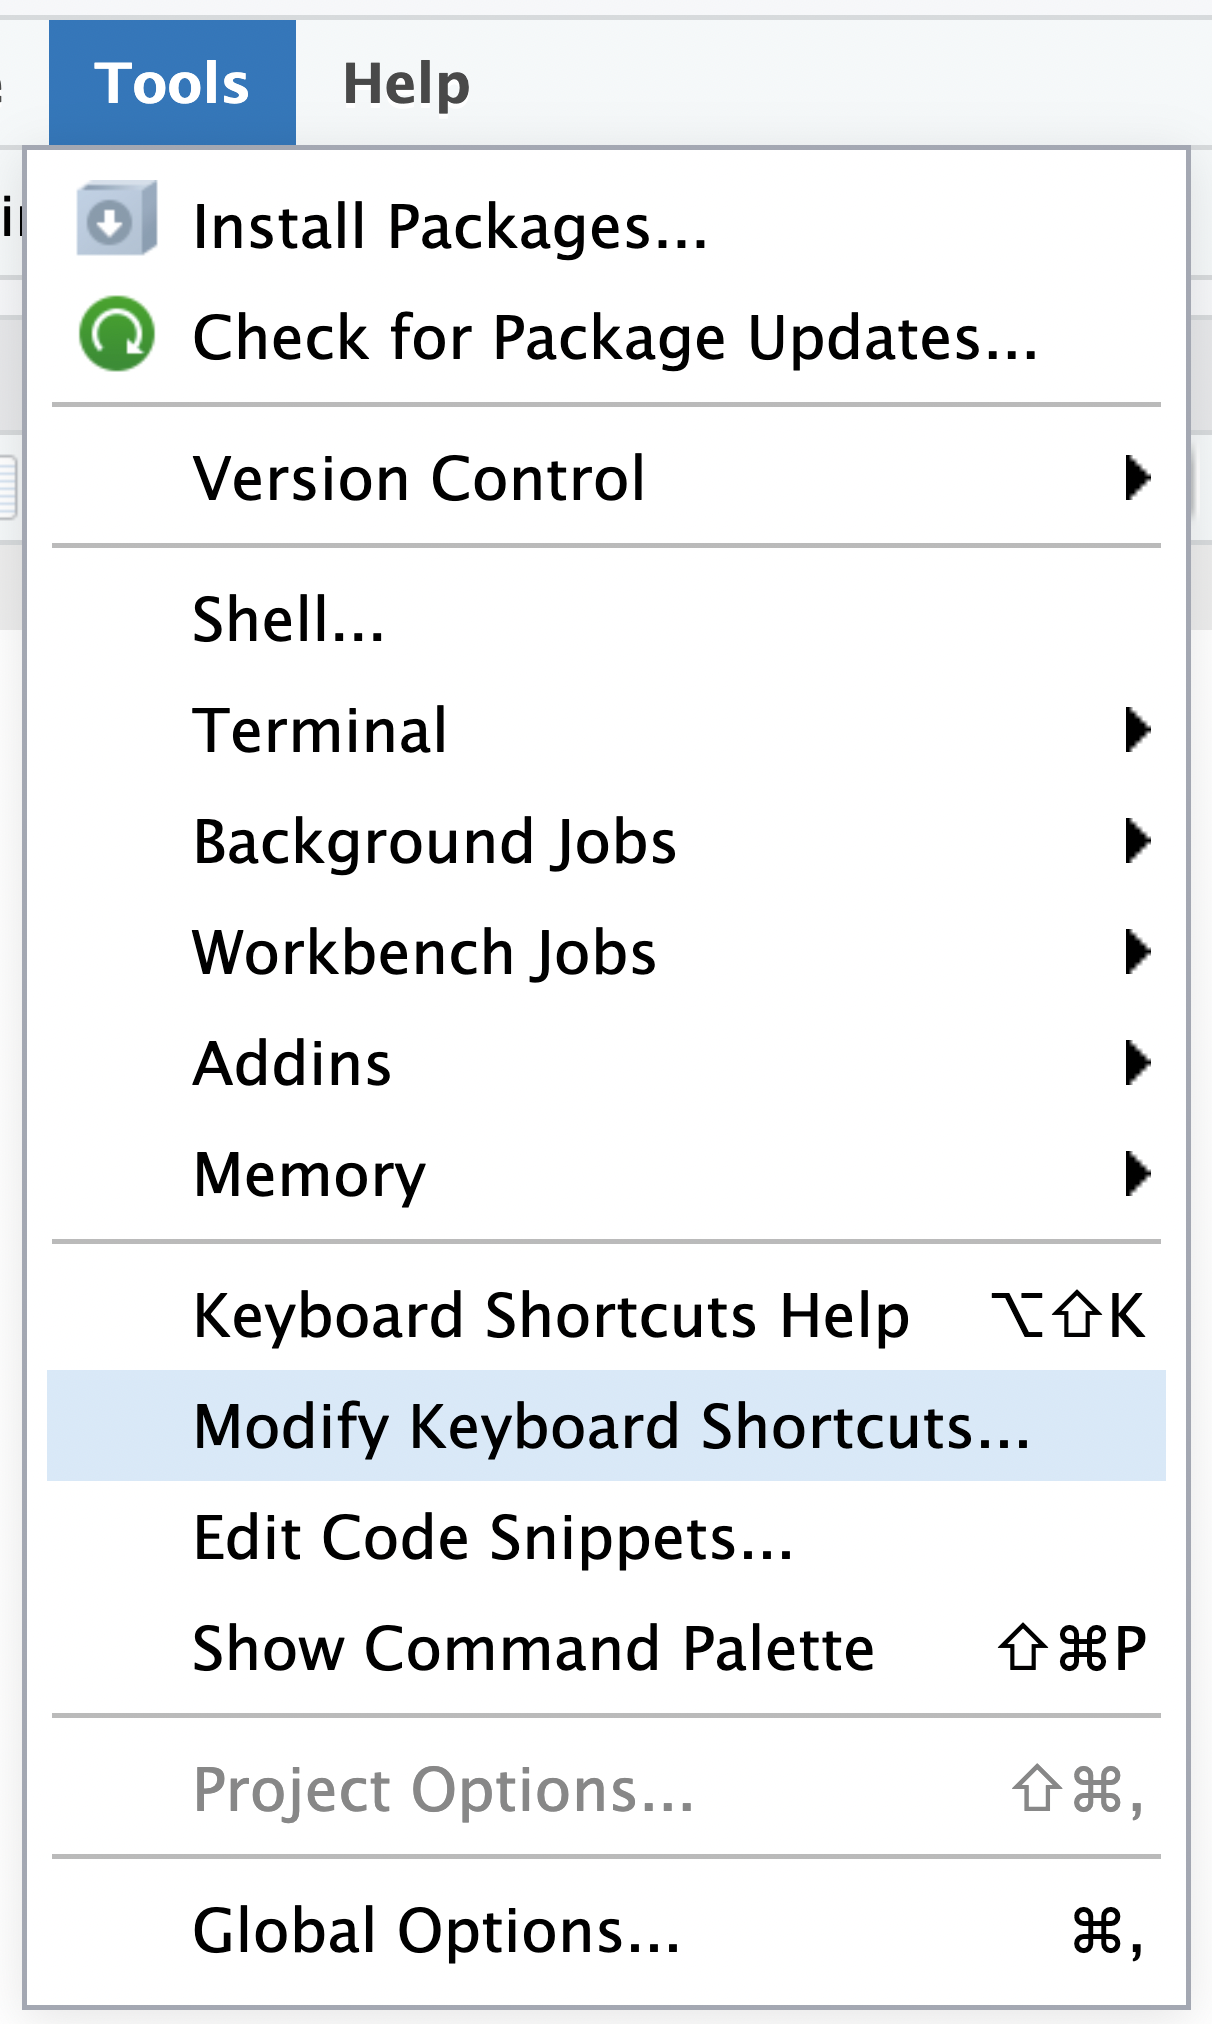 A screenshot of the Tools menu bar highlighting the Modify Keyboards Shortcuts